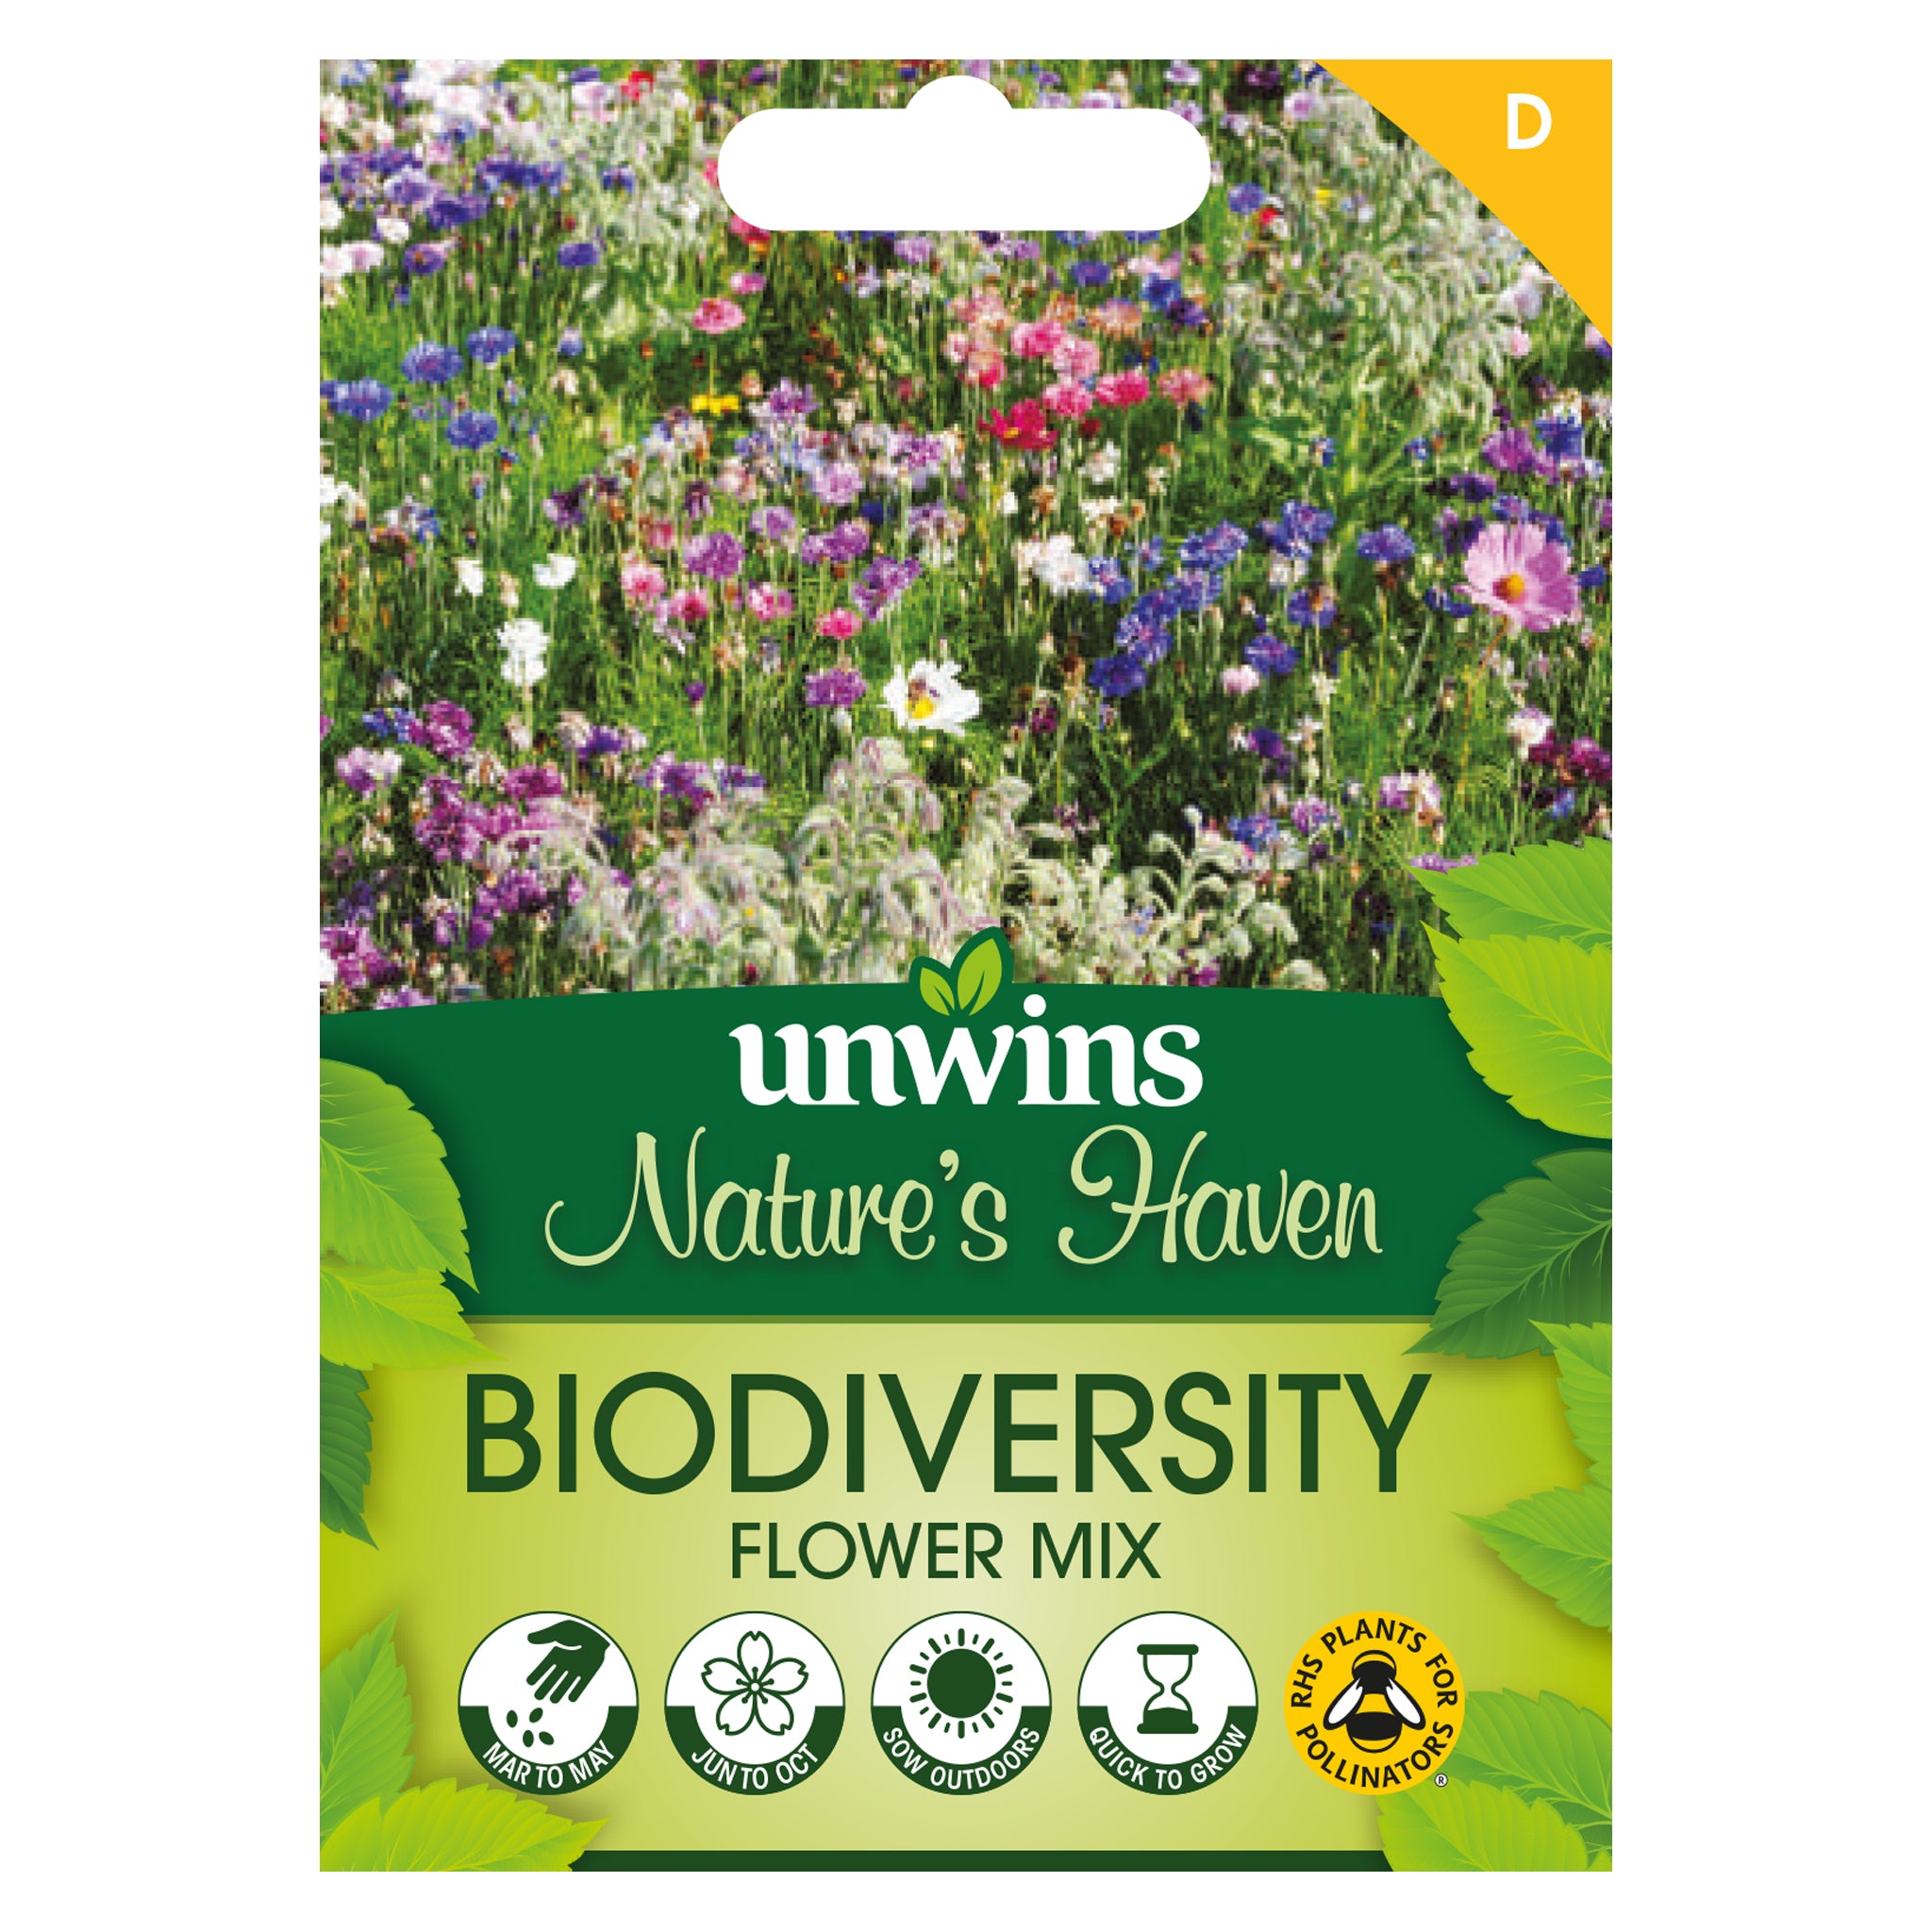 Nature's Haven Biodiversity Flower Mix Seeds